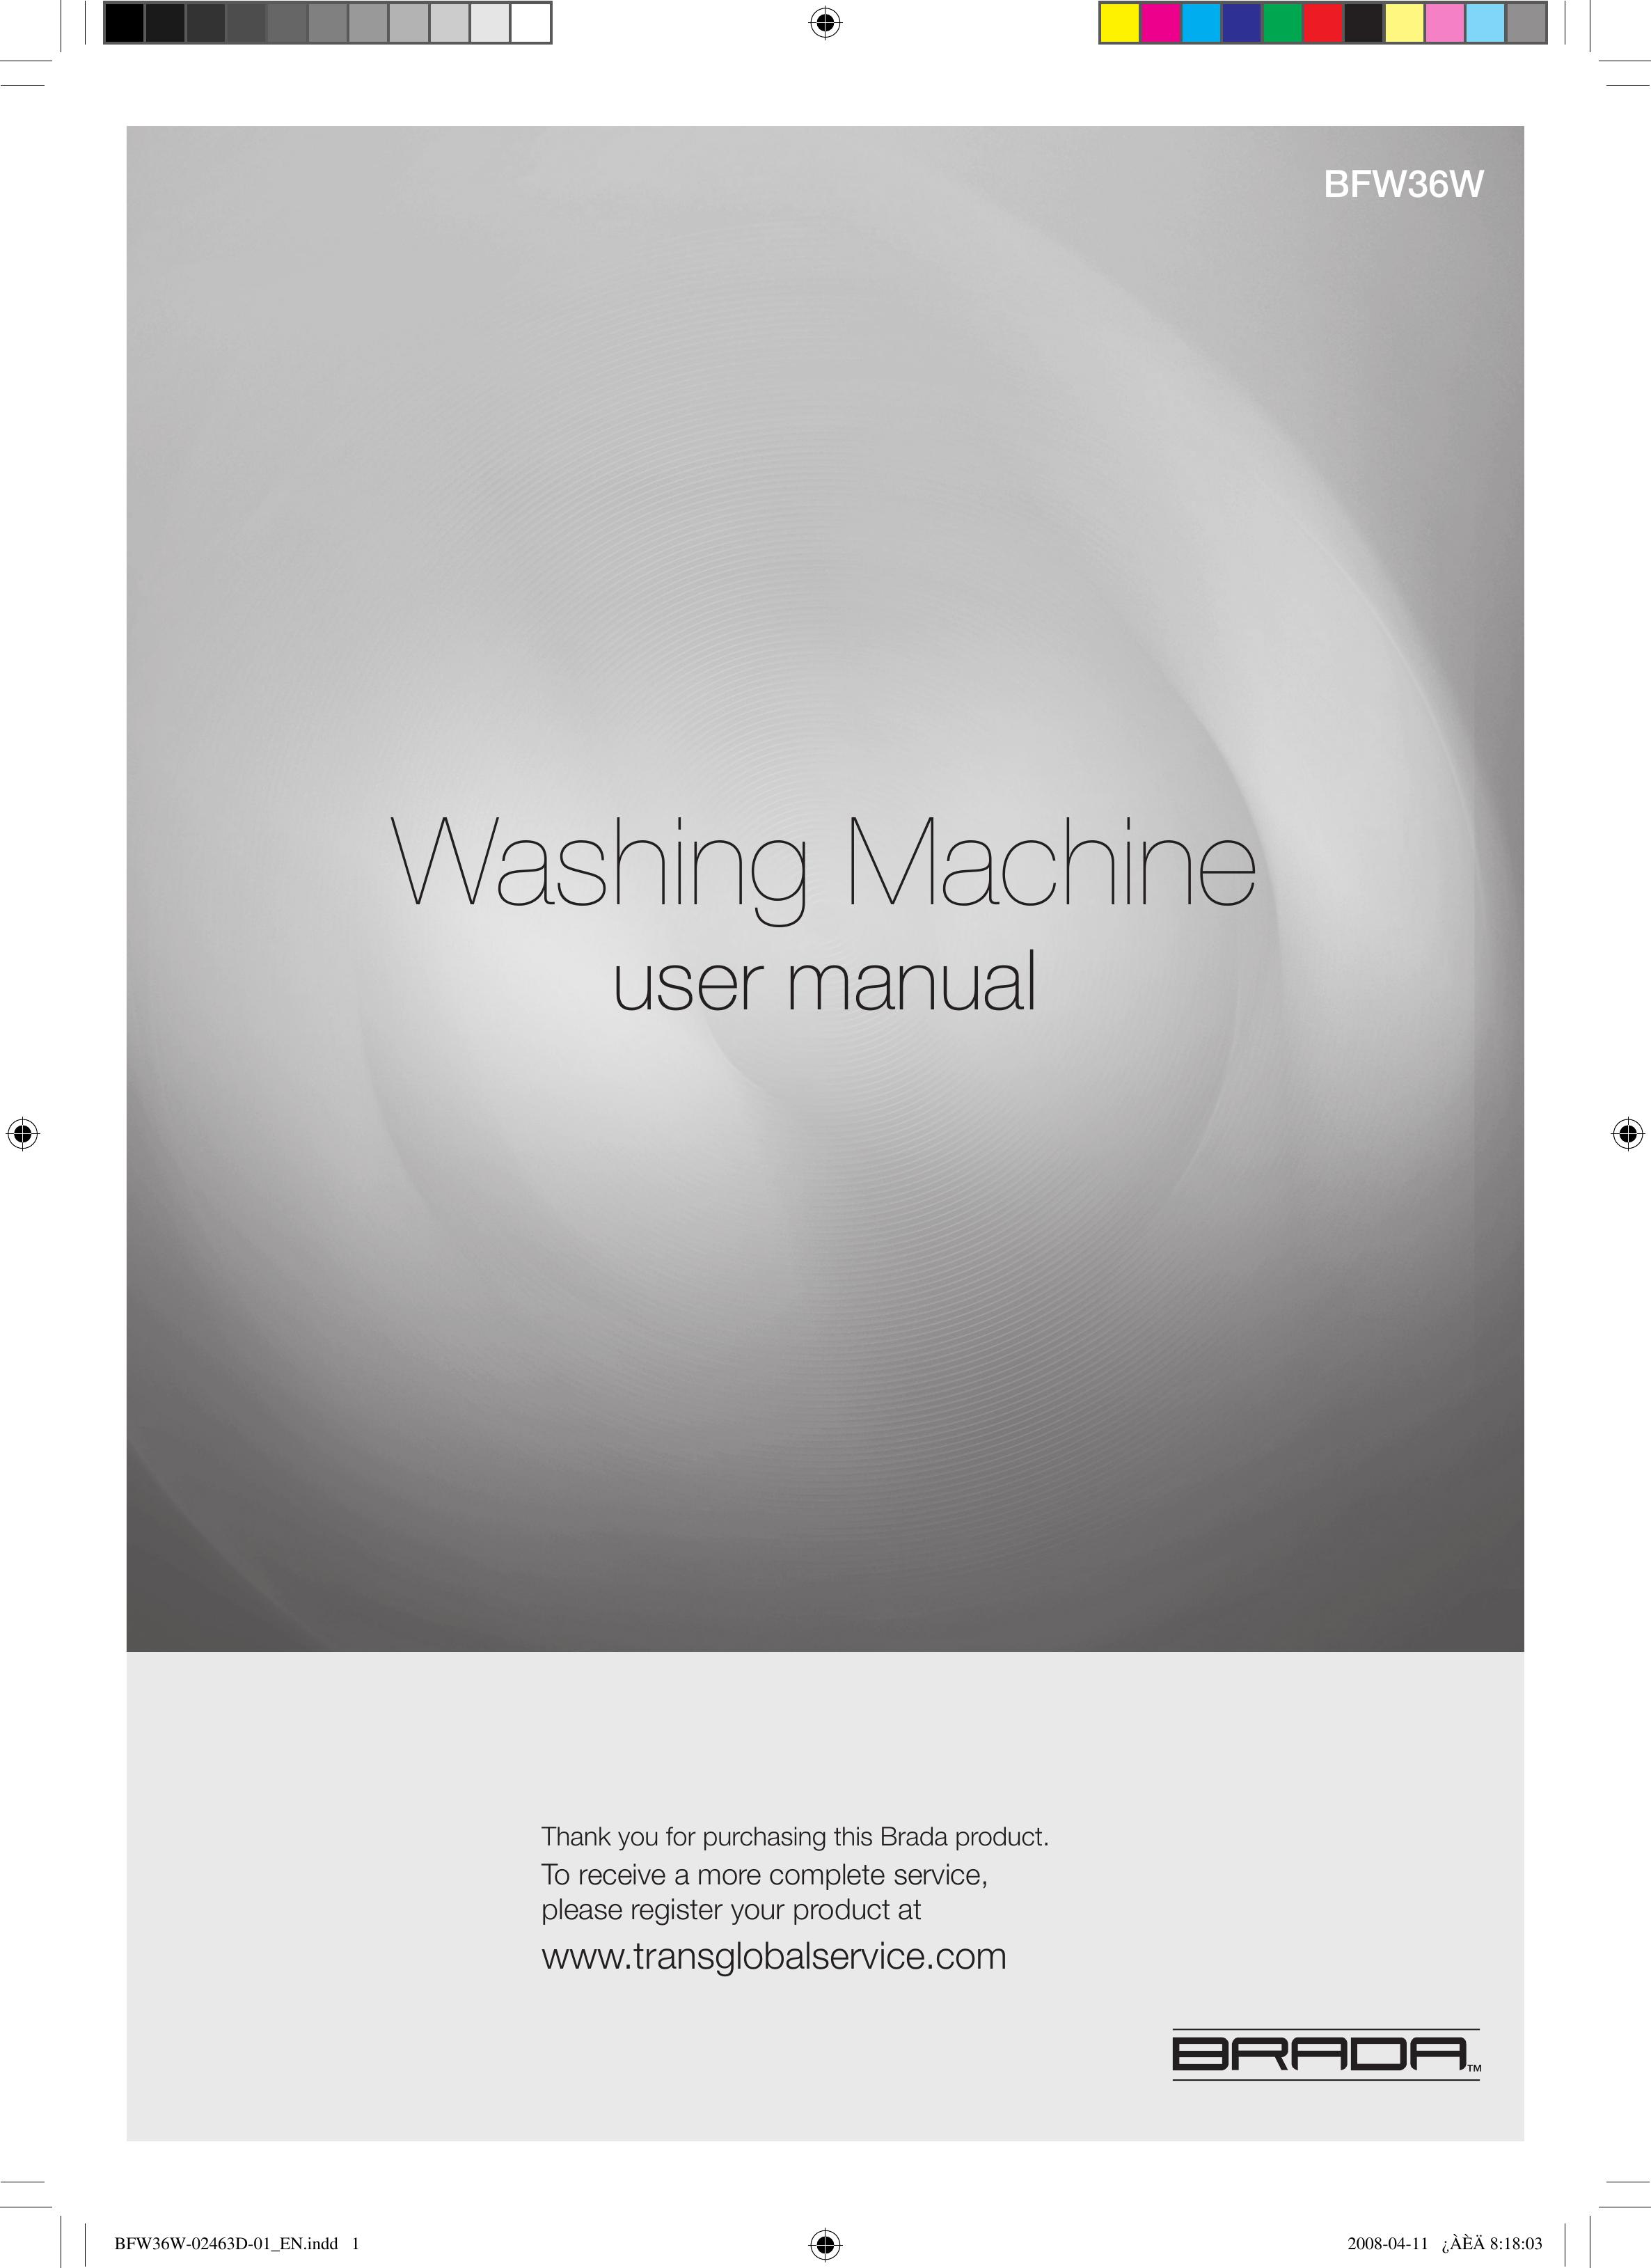 Samsung BFW36W Washer/Dryer User Manual